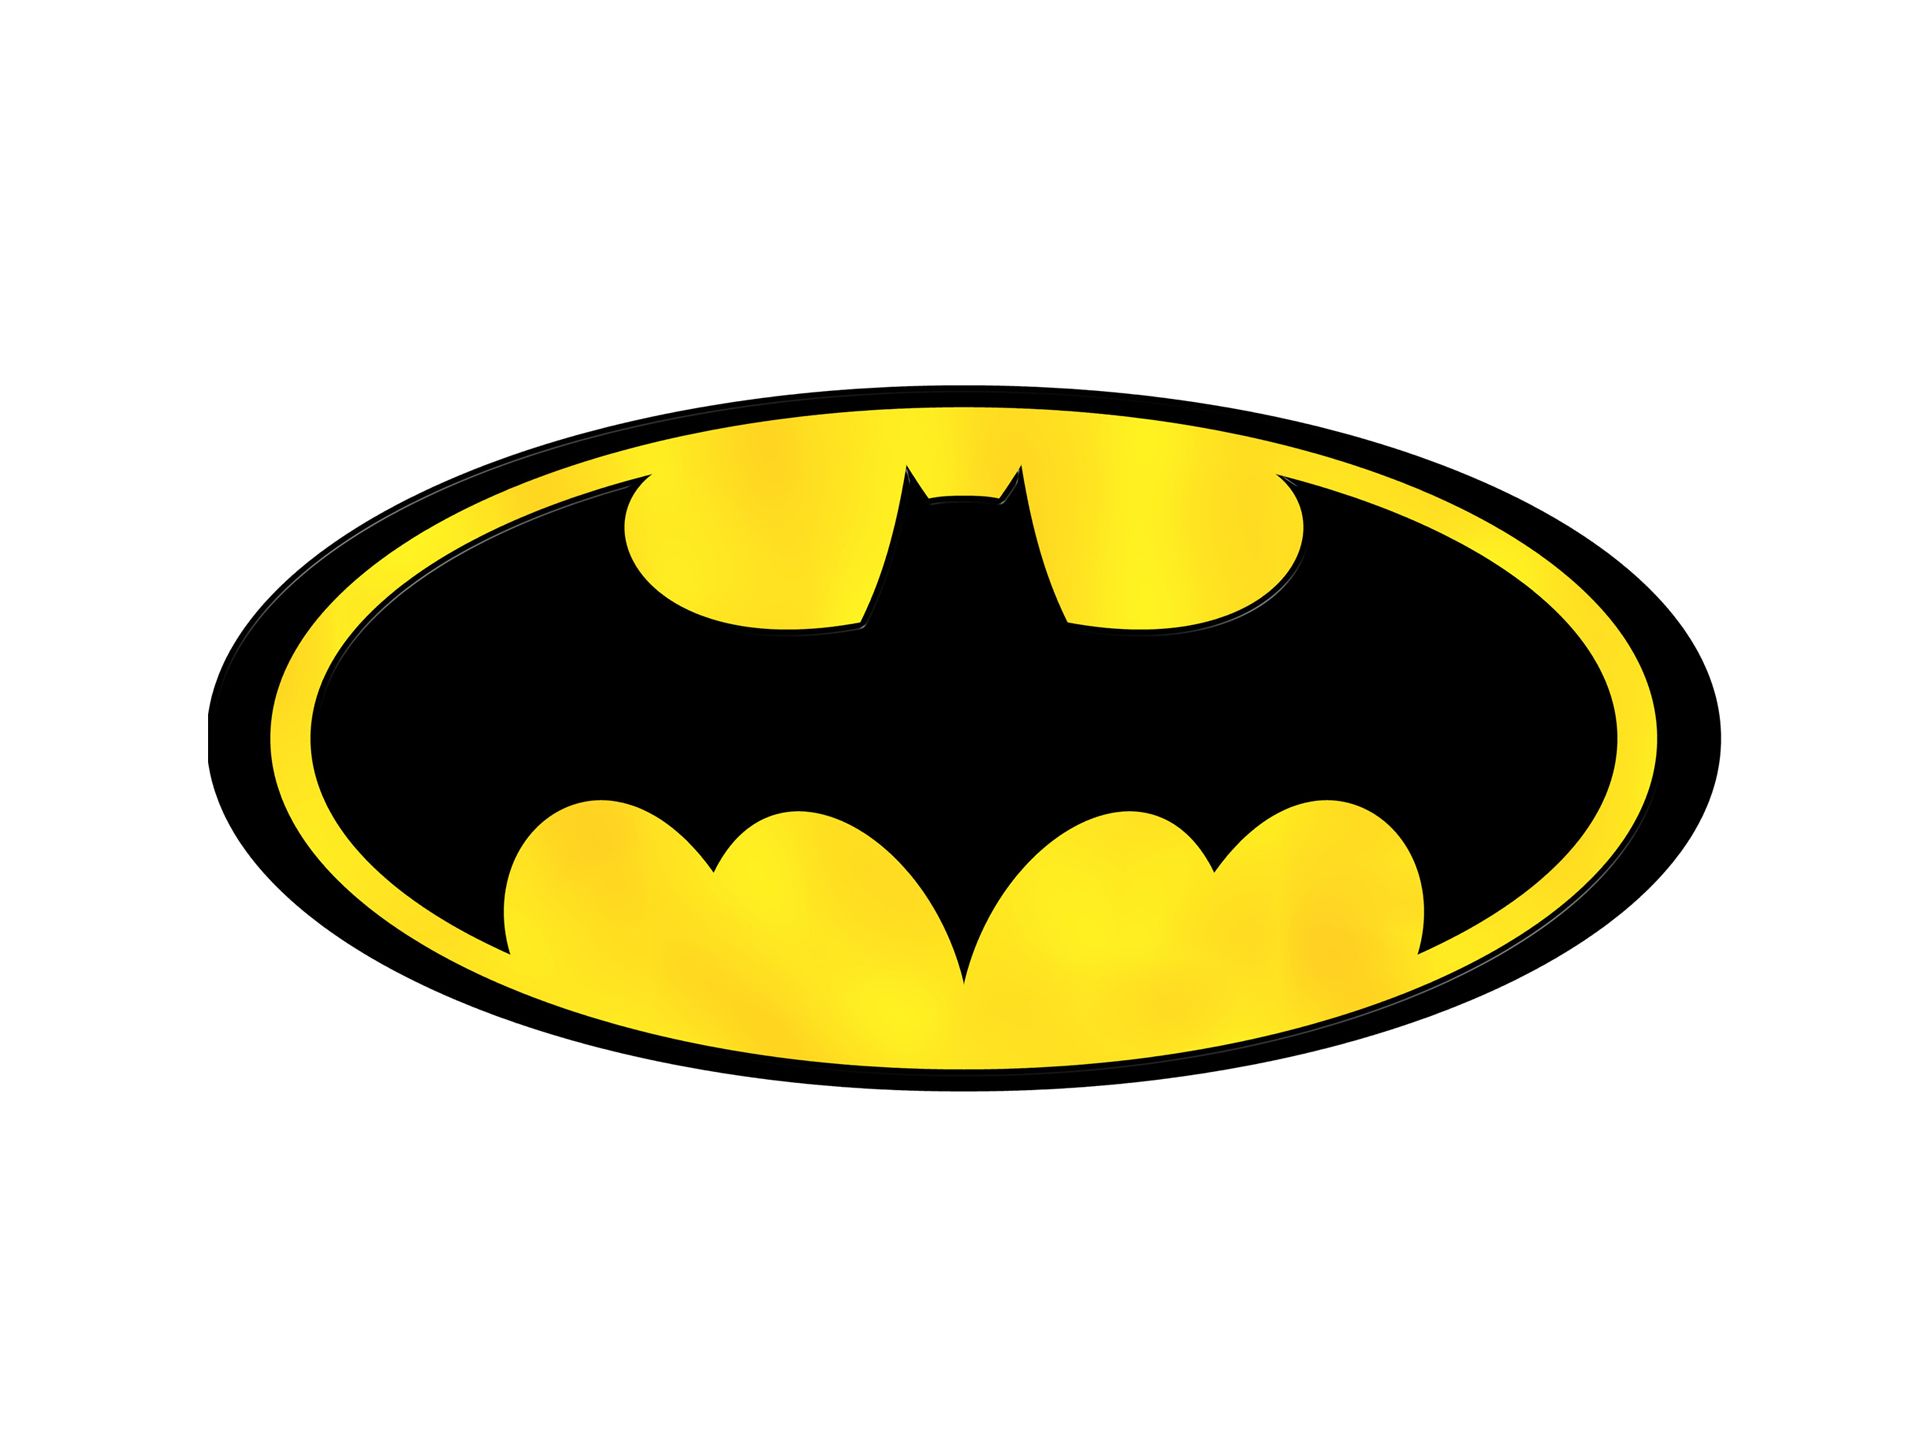 Batman Logo Picture Wallpapers 747 - HD Wallpaper Site